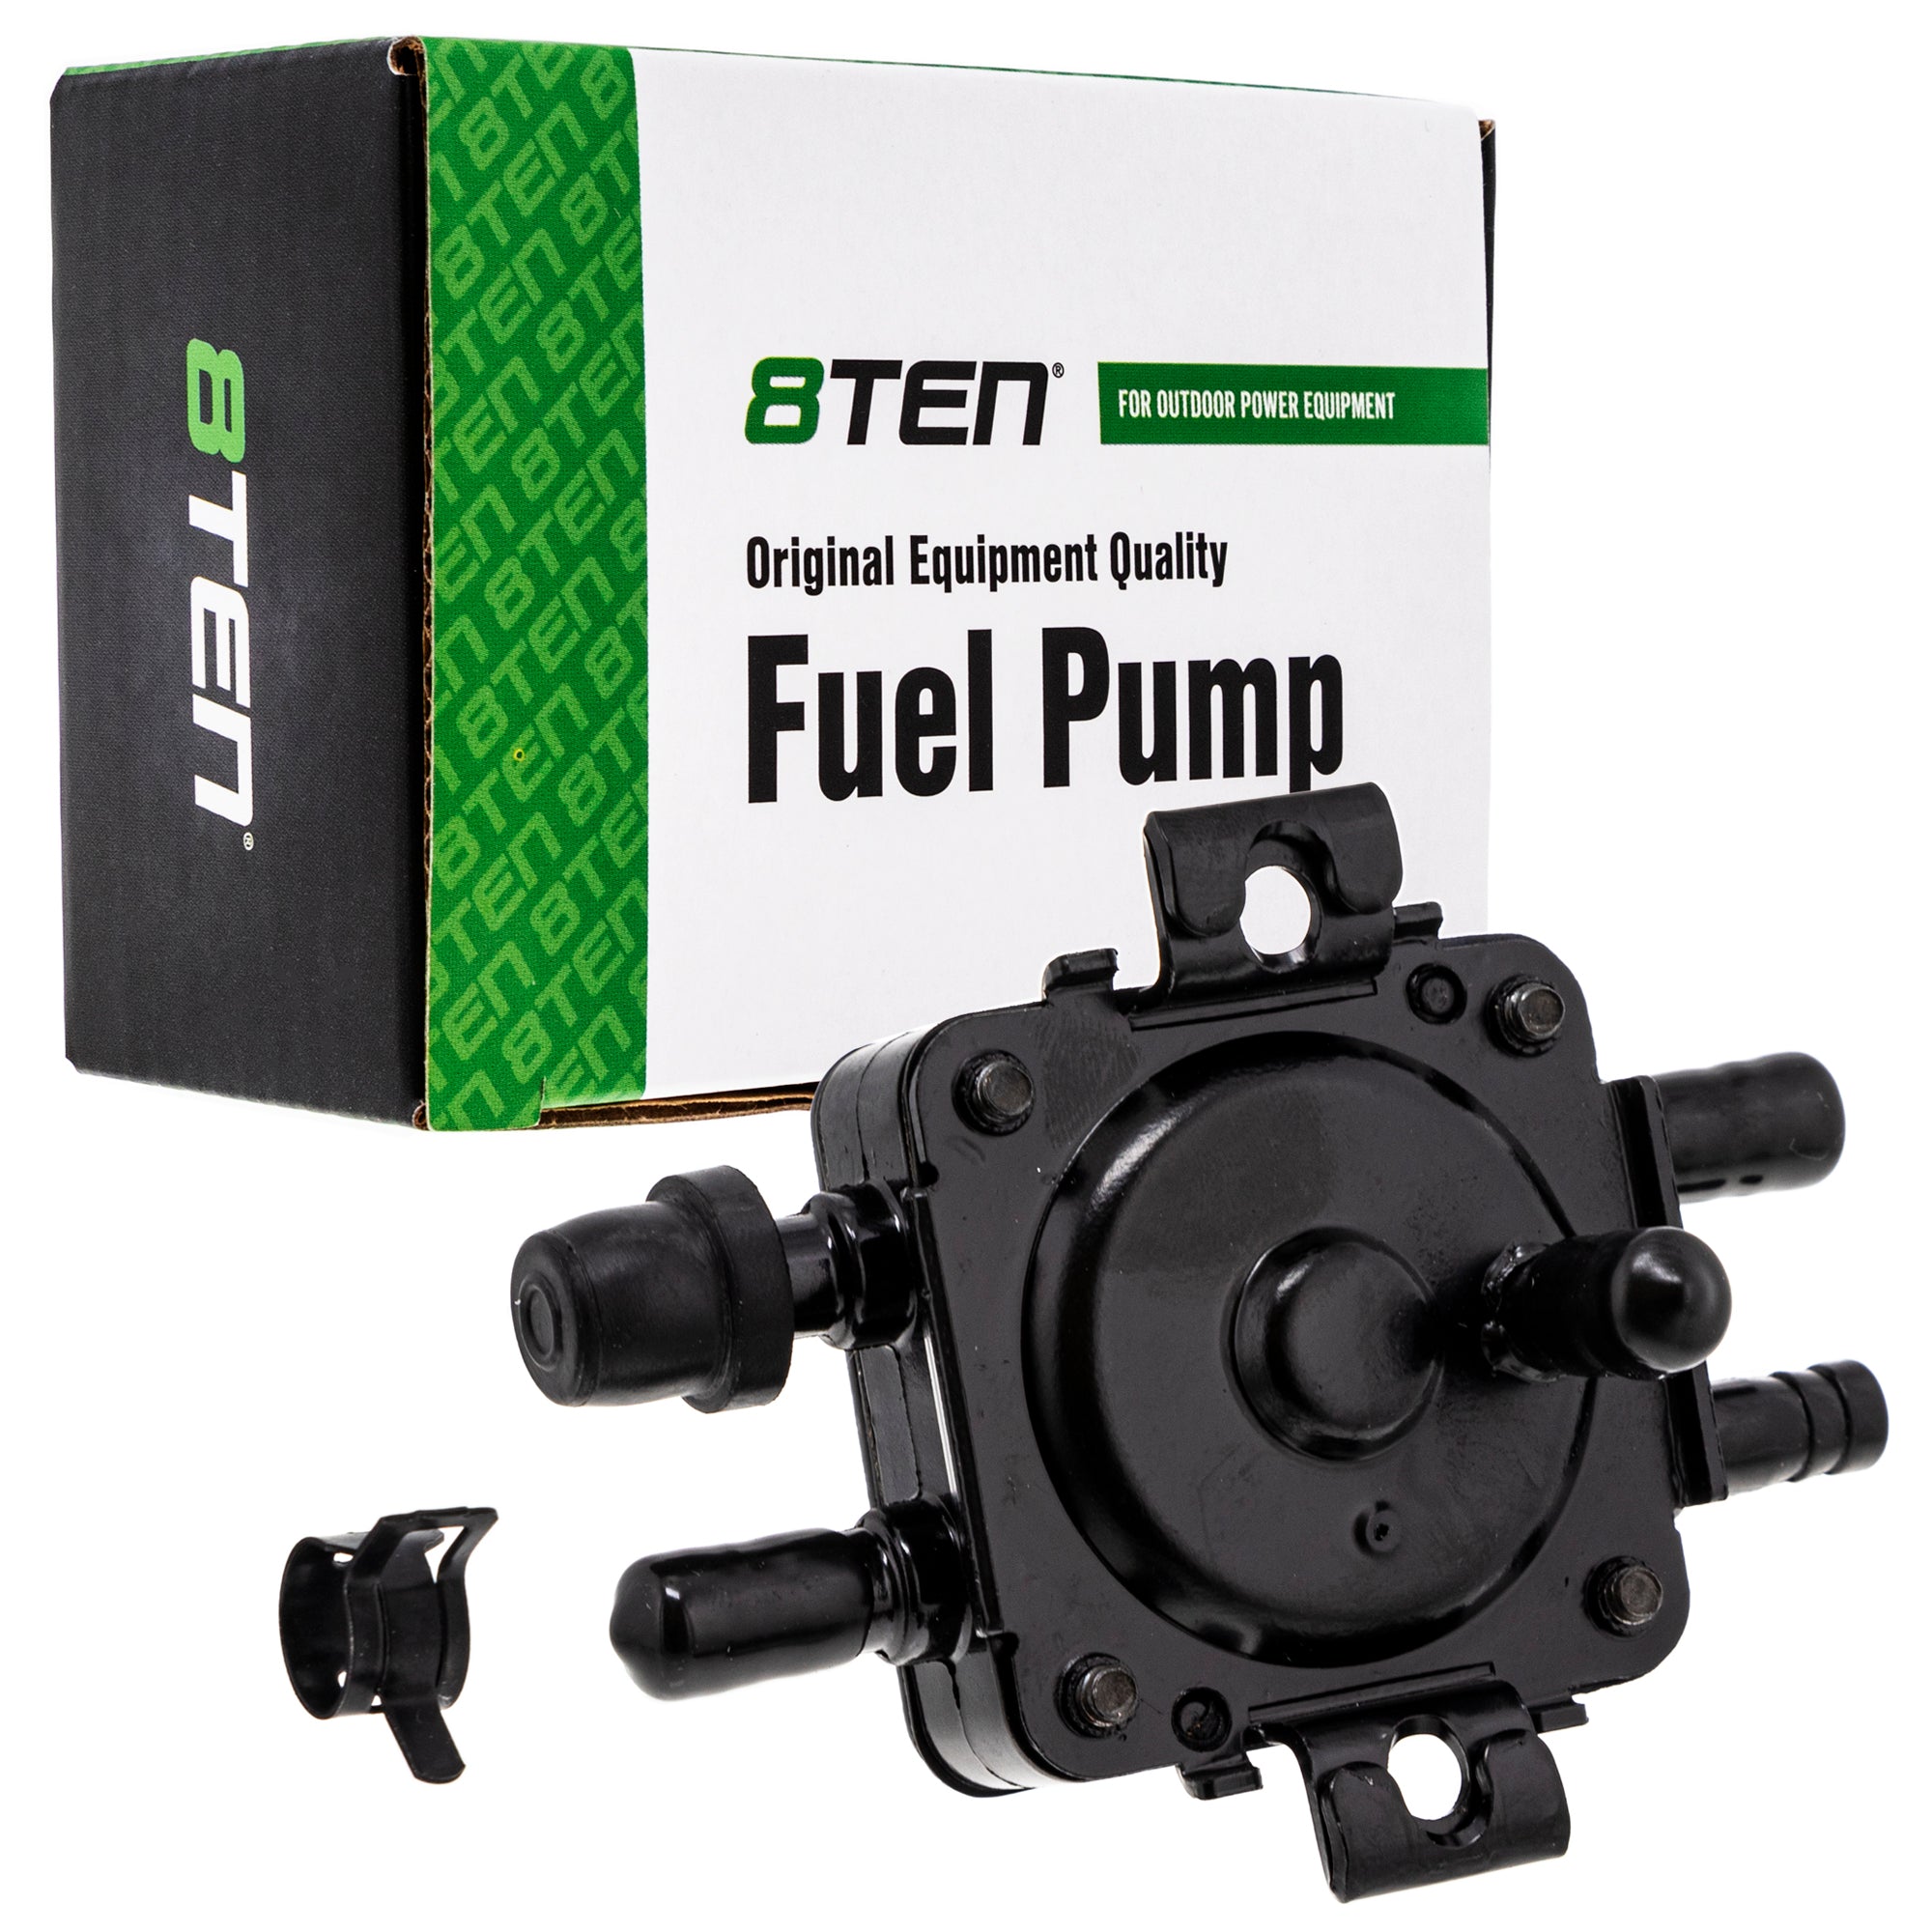 Fuel Pump Kit for zOTHER Toro Exmark ProLine Horse GroundsMaster 8TEN 519-CFP2220A